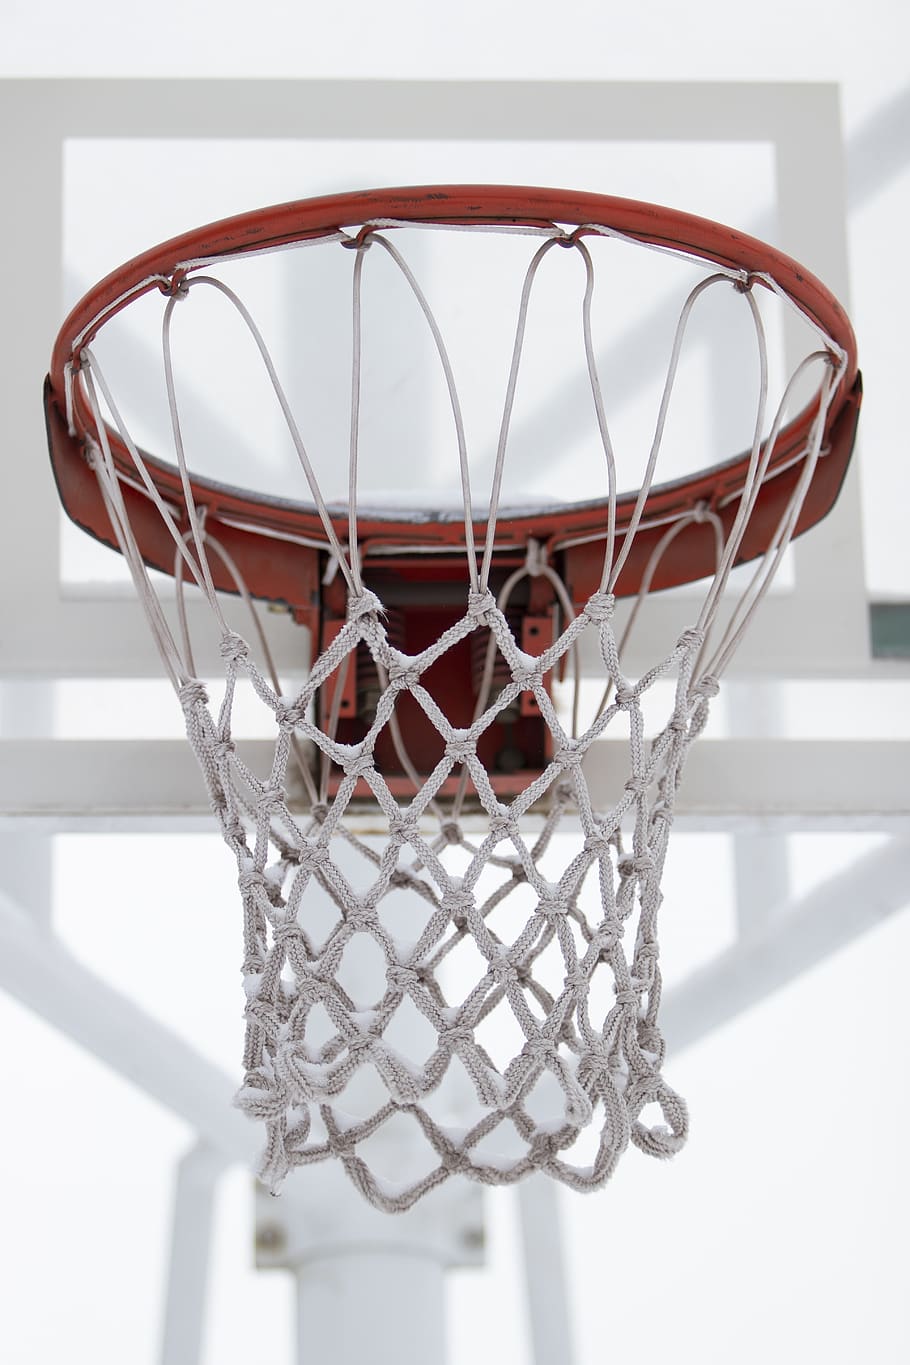 basketball, sport, goji, basketball hoops, basket, net, basketball courts, game, hope, basketball views